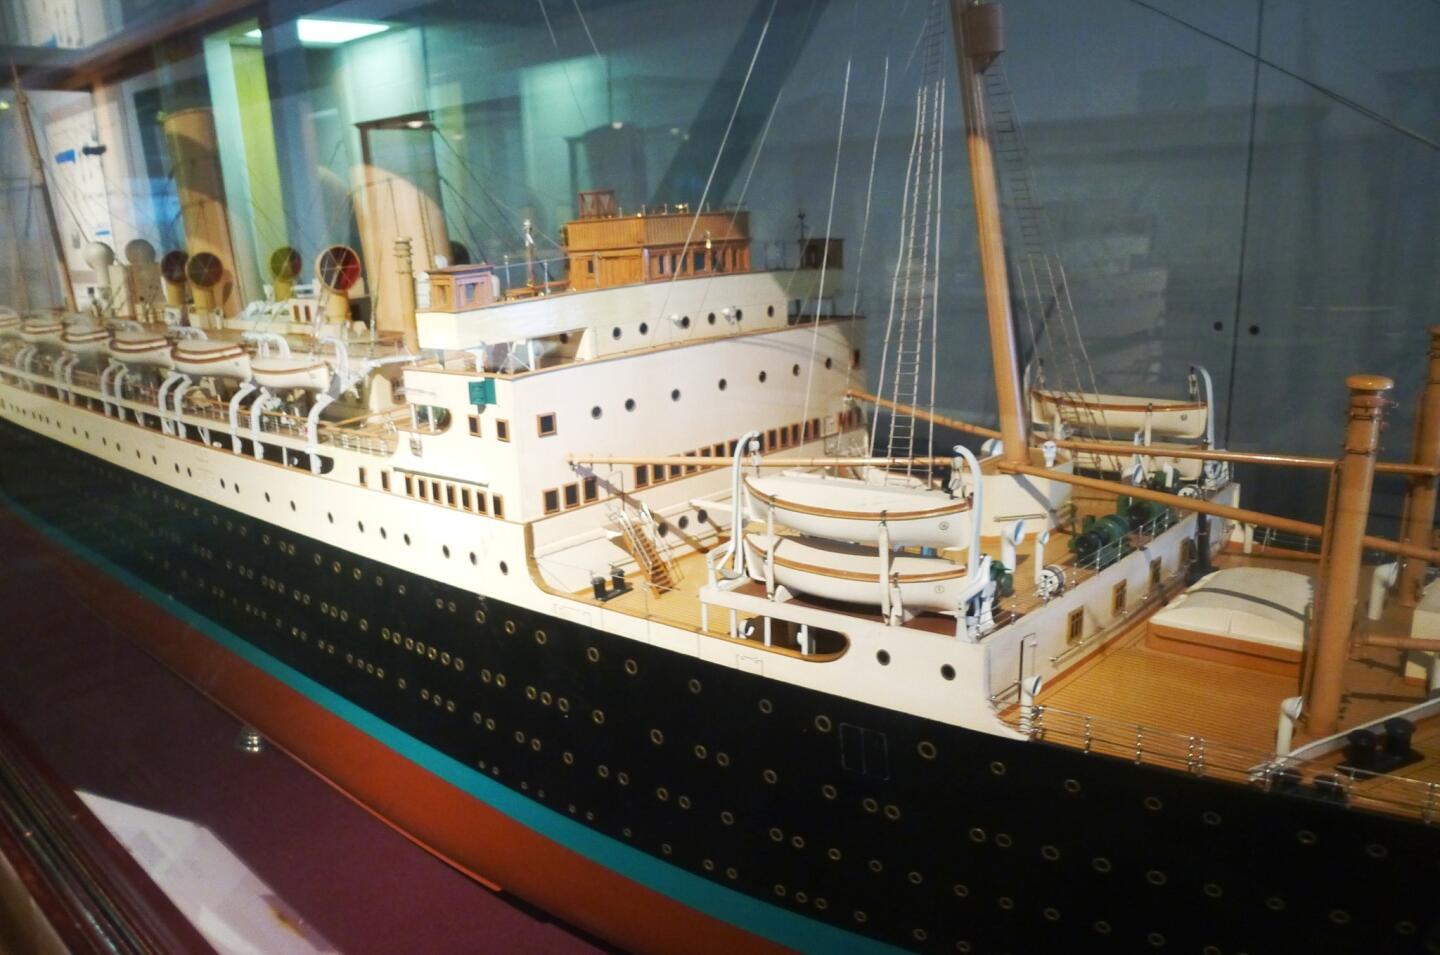 Maritime Museum of the Atlantic, Halifax